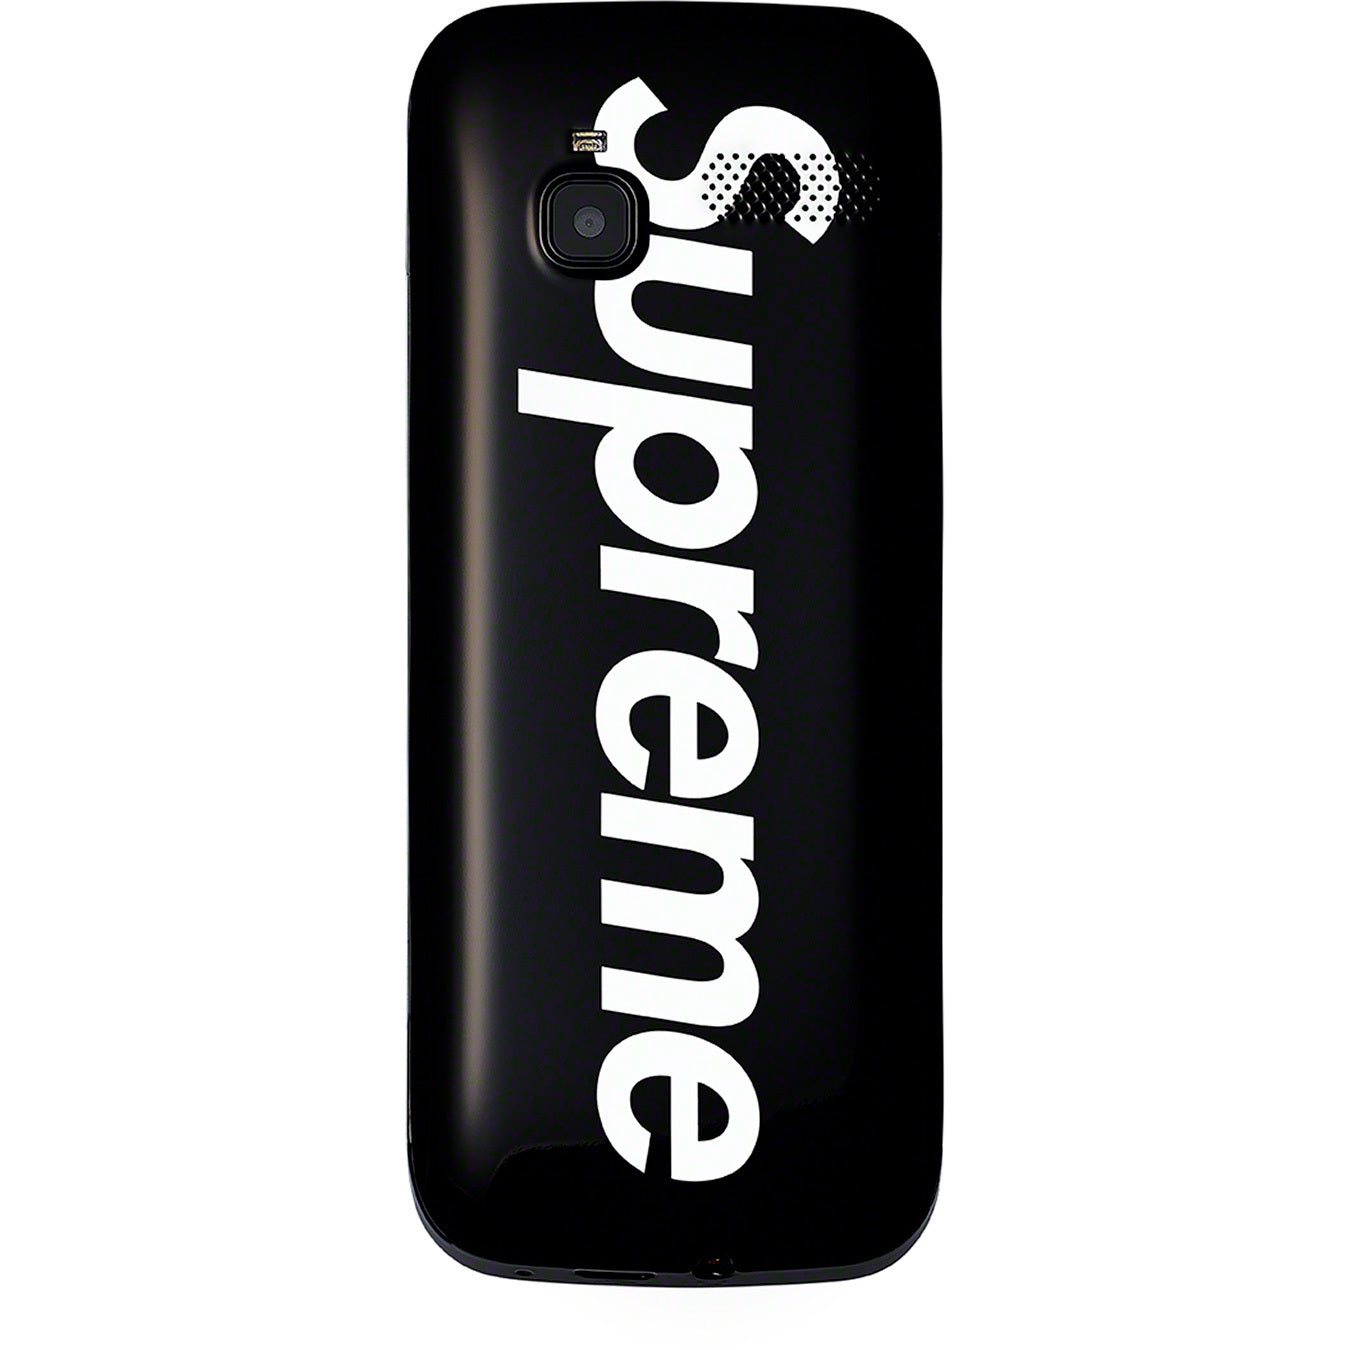 Supreme Blu Burner Phone - Black by Supreme from £225.00